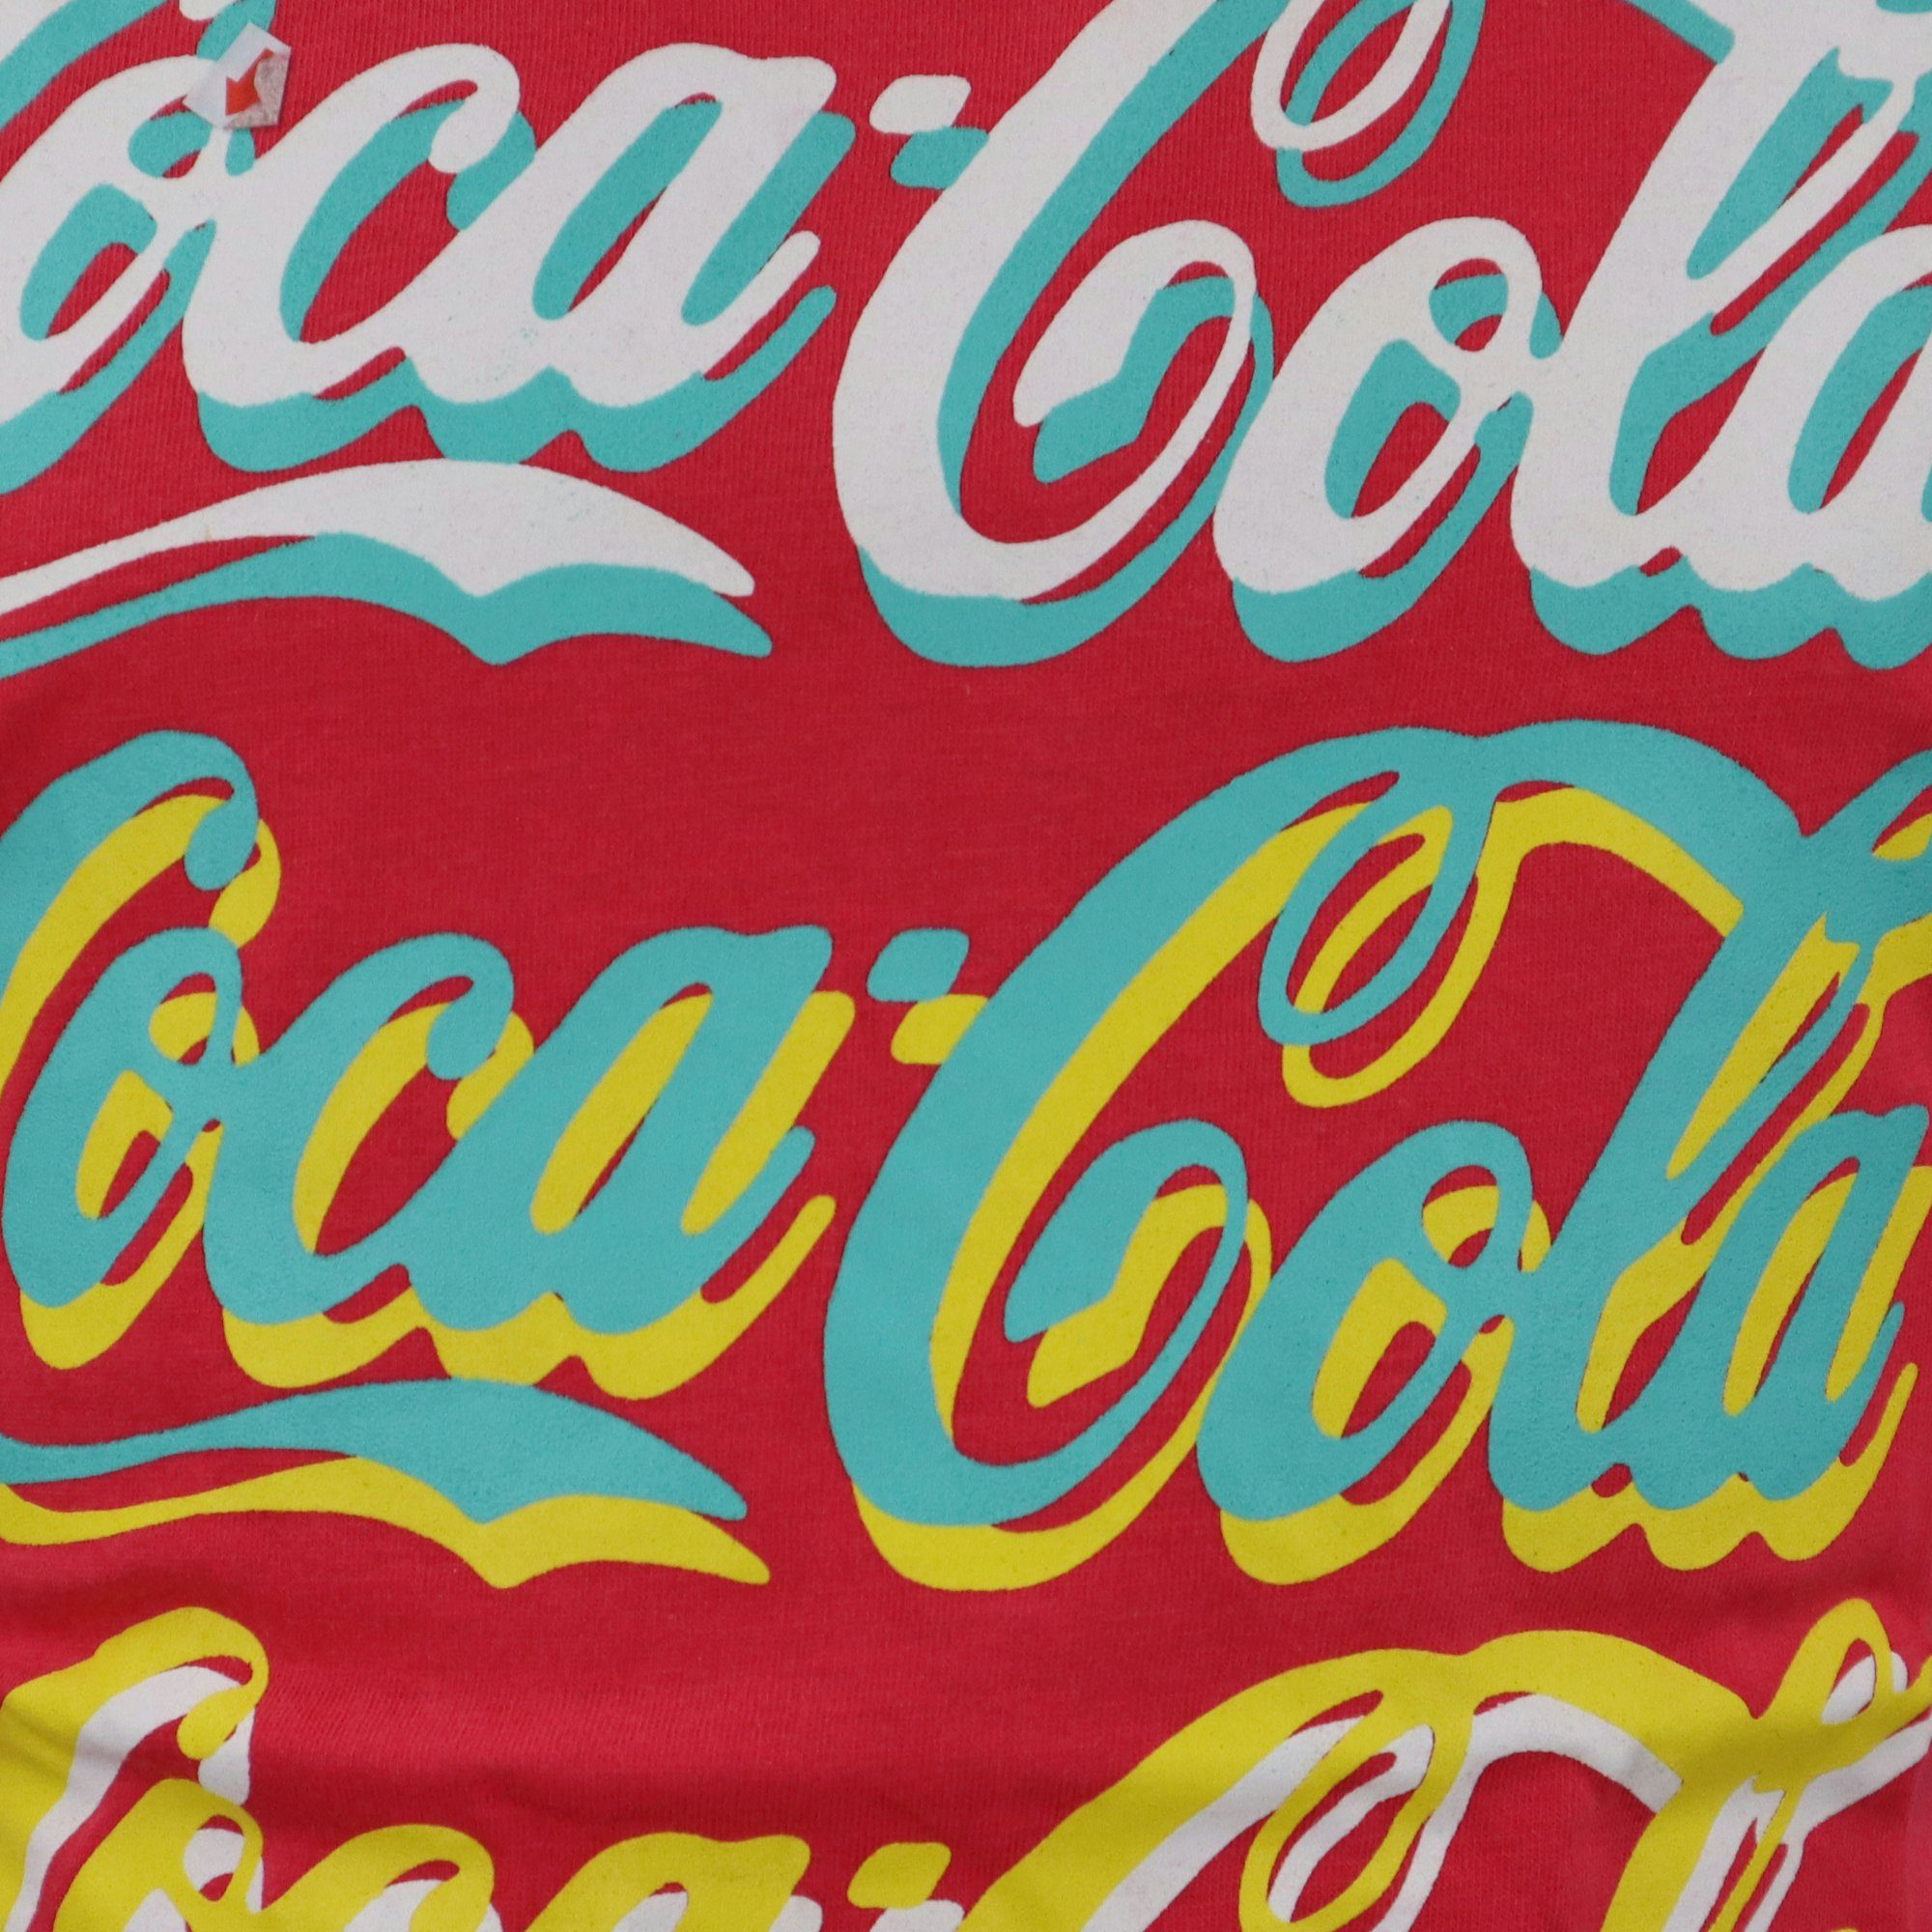 COCA COLA Print-Shirt Top Rot Cola bis Coca 134 Kinder T-Shirt Mädchen 164, kurzes Baumwolle Gr. Jugend